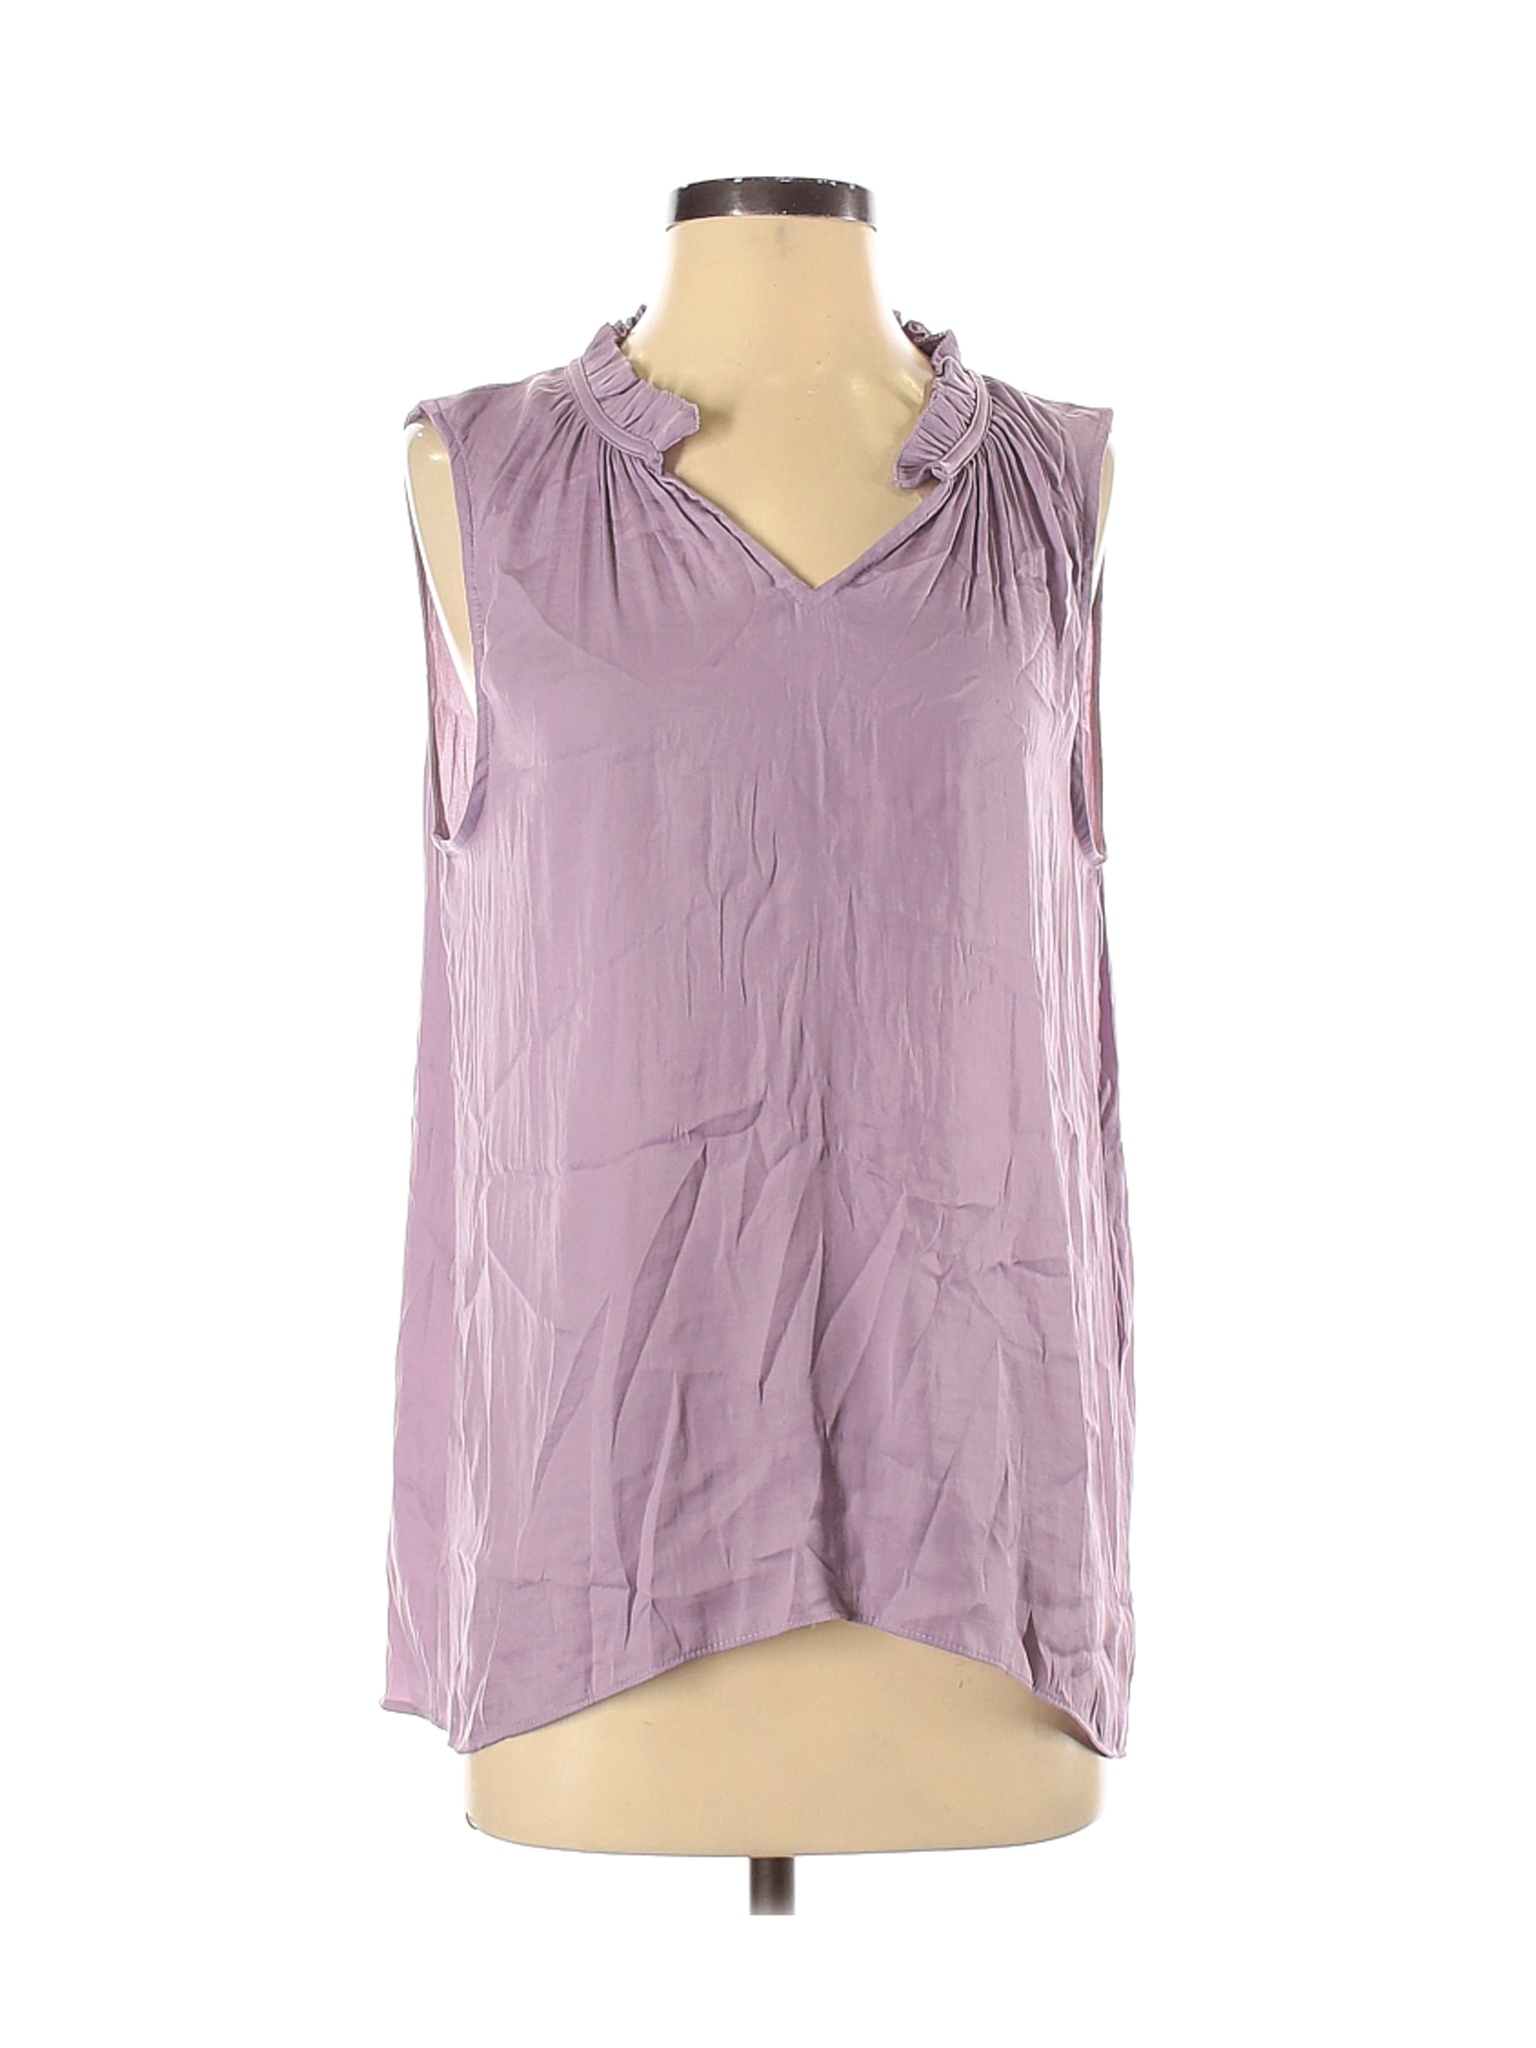 Simply Vera Vera Wang Women Purple Sleeveless Blouse S | eBay